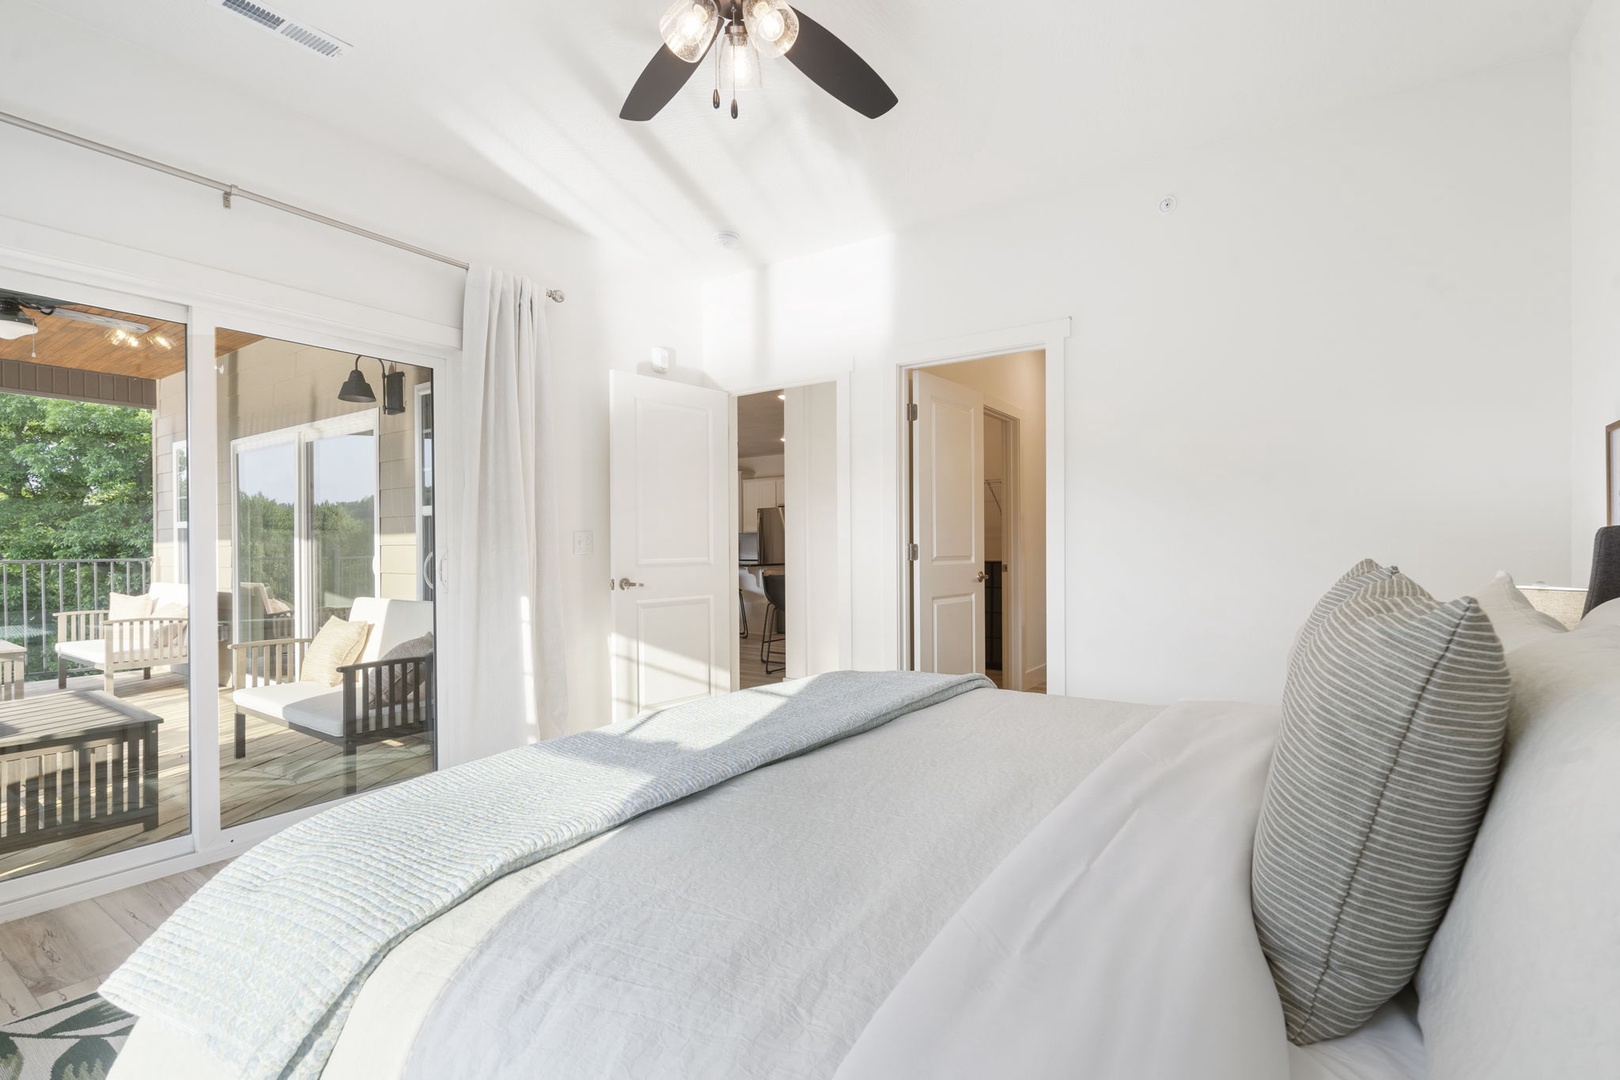 The king suite offers a private en suite, Smart TV, & balcony access